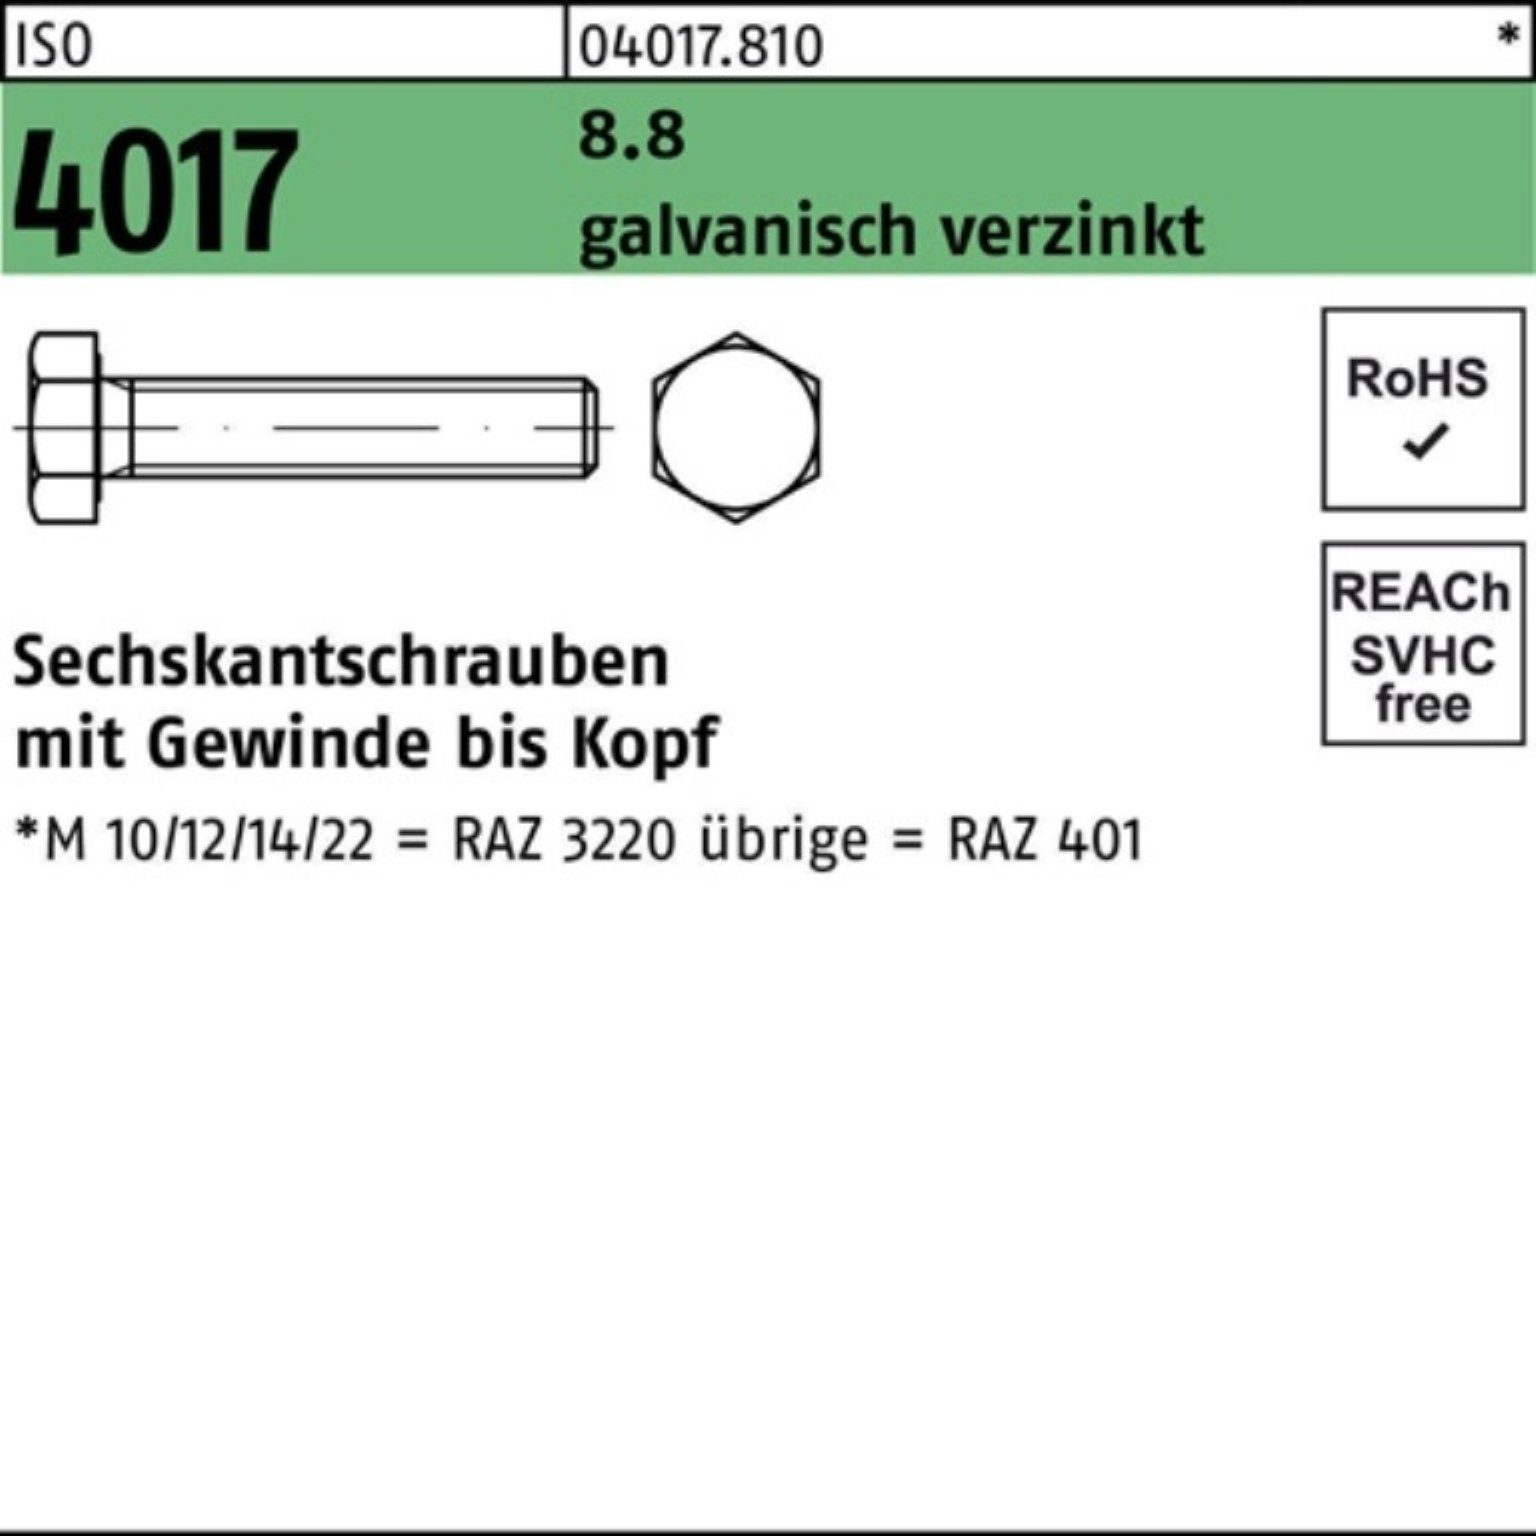 Bufab Sechskantschraube 100er Pack Sechskantschraube 8.8 M18x St VG 4017 40 ISO 50 galv.verz